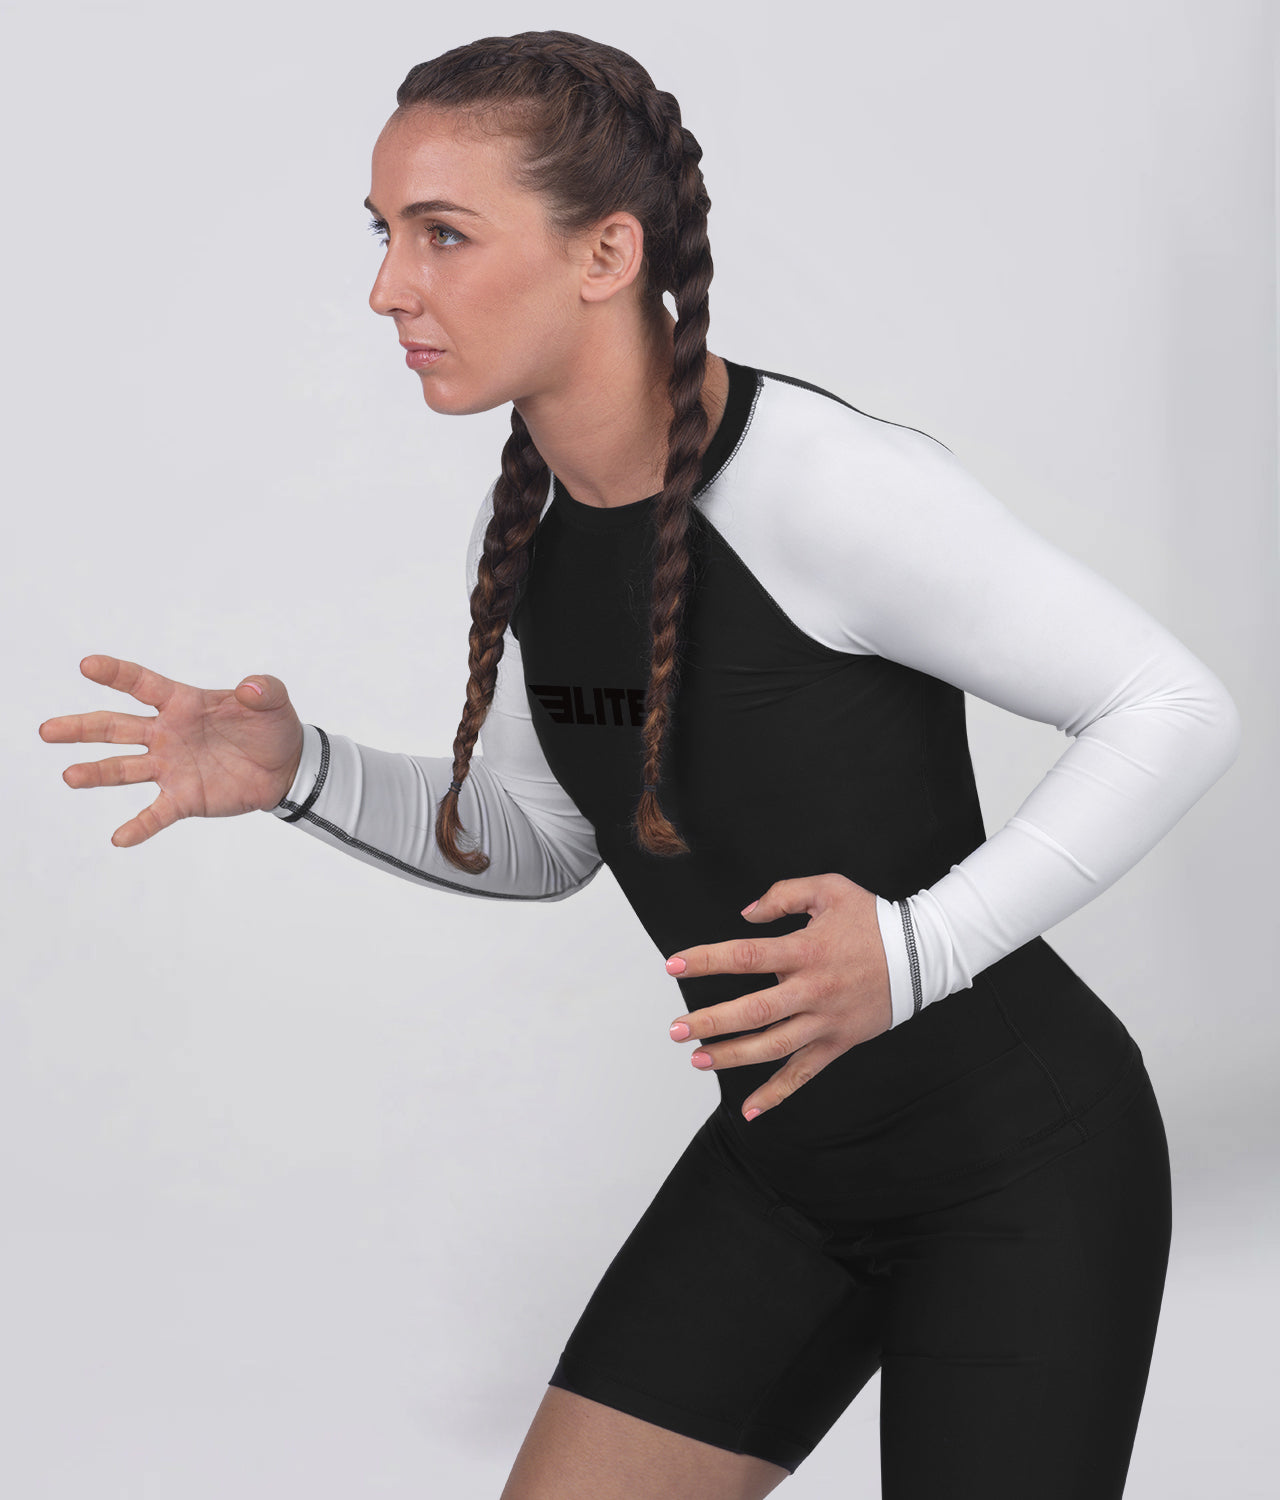 Elite Sports Women's Standard White Long Sleeve MMA Rash Guard